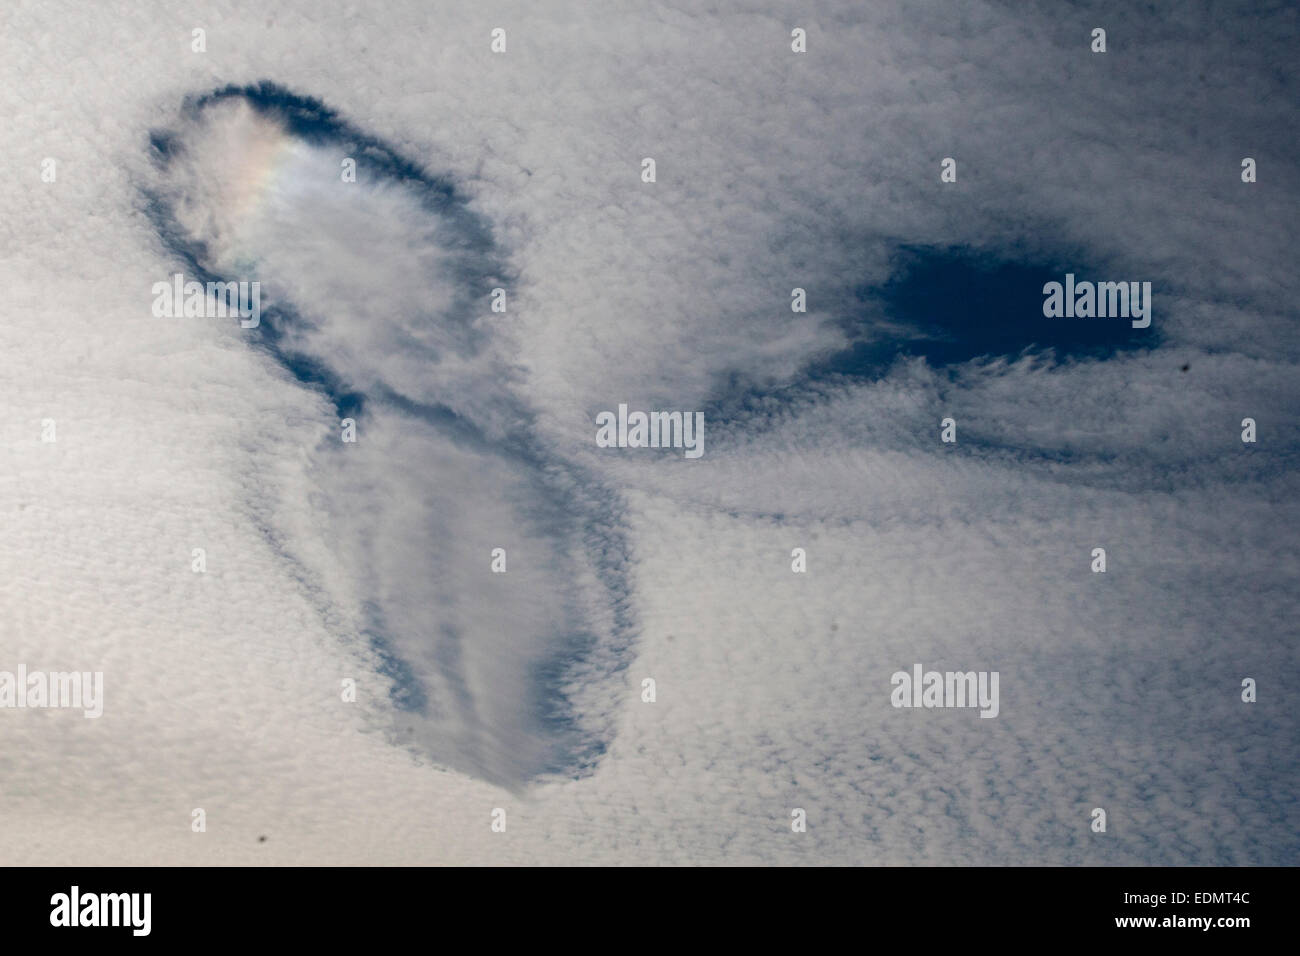 Fallstreak cloud formation over El Cerrito, California, December 2014. Stock Photo